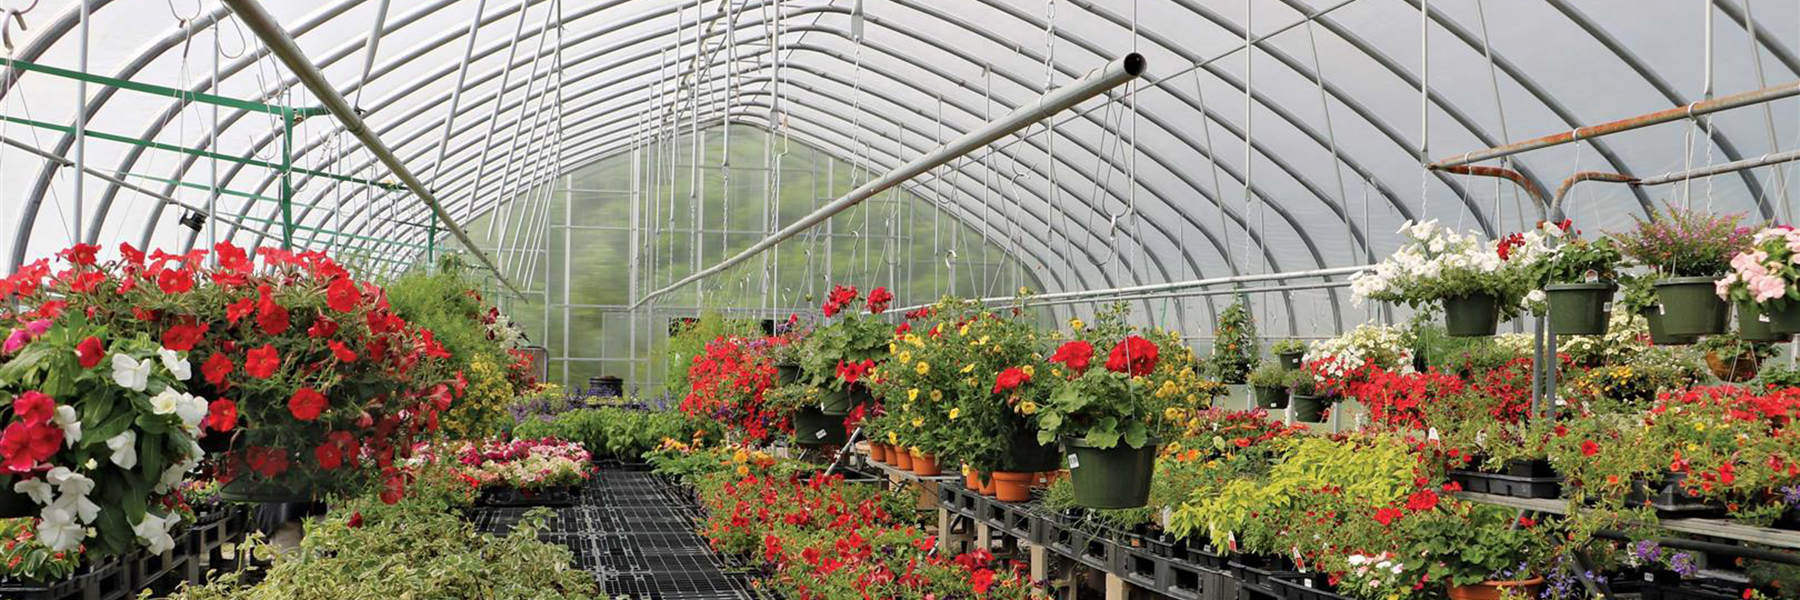 nursery greenhouse flowers